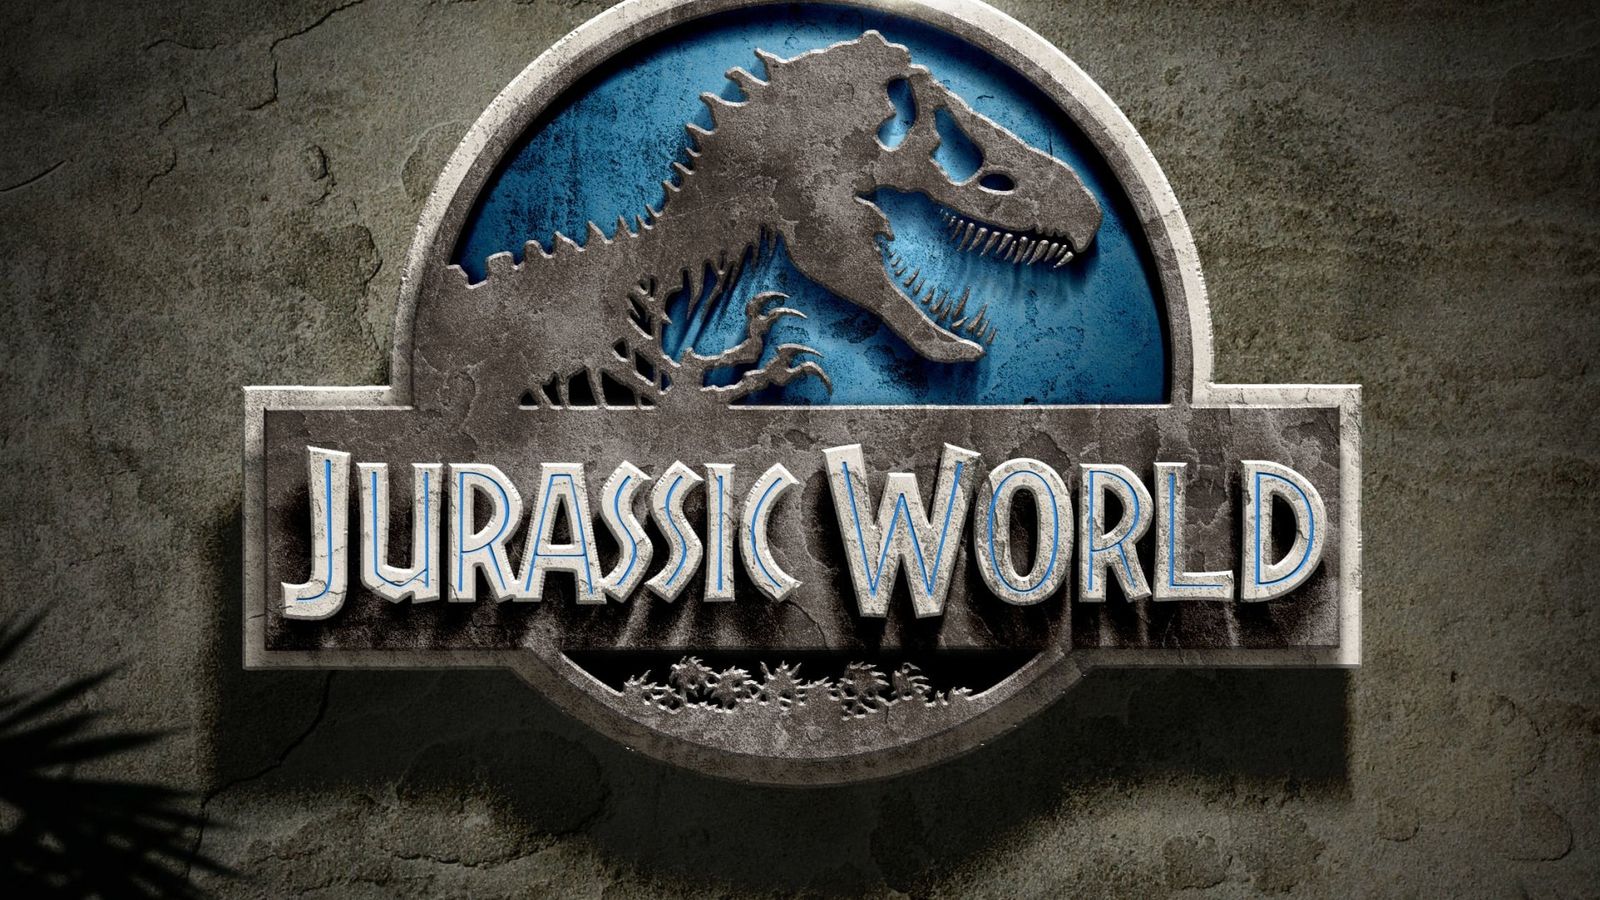 Jurassic World tops weekend box office again